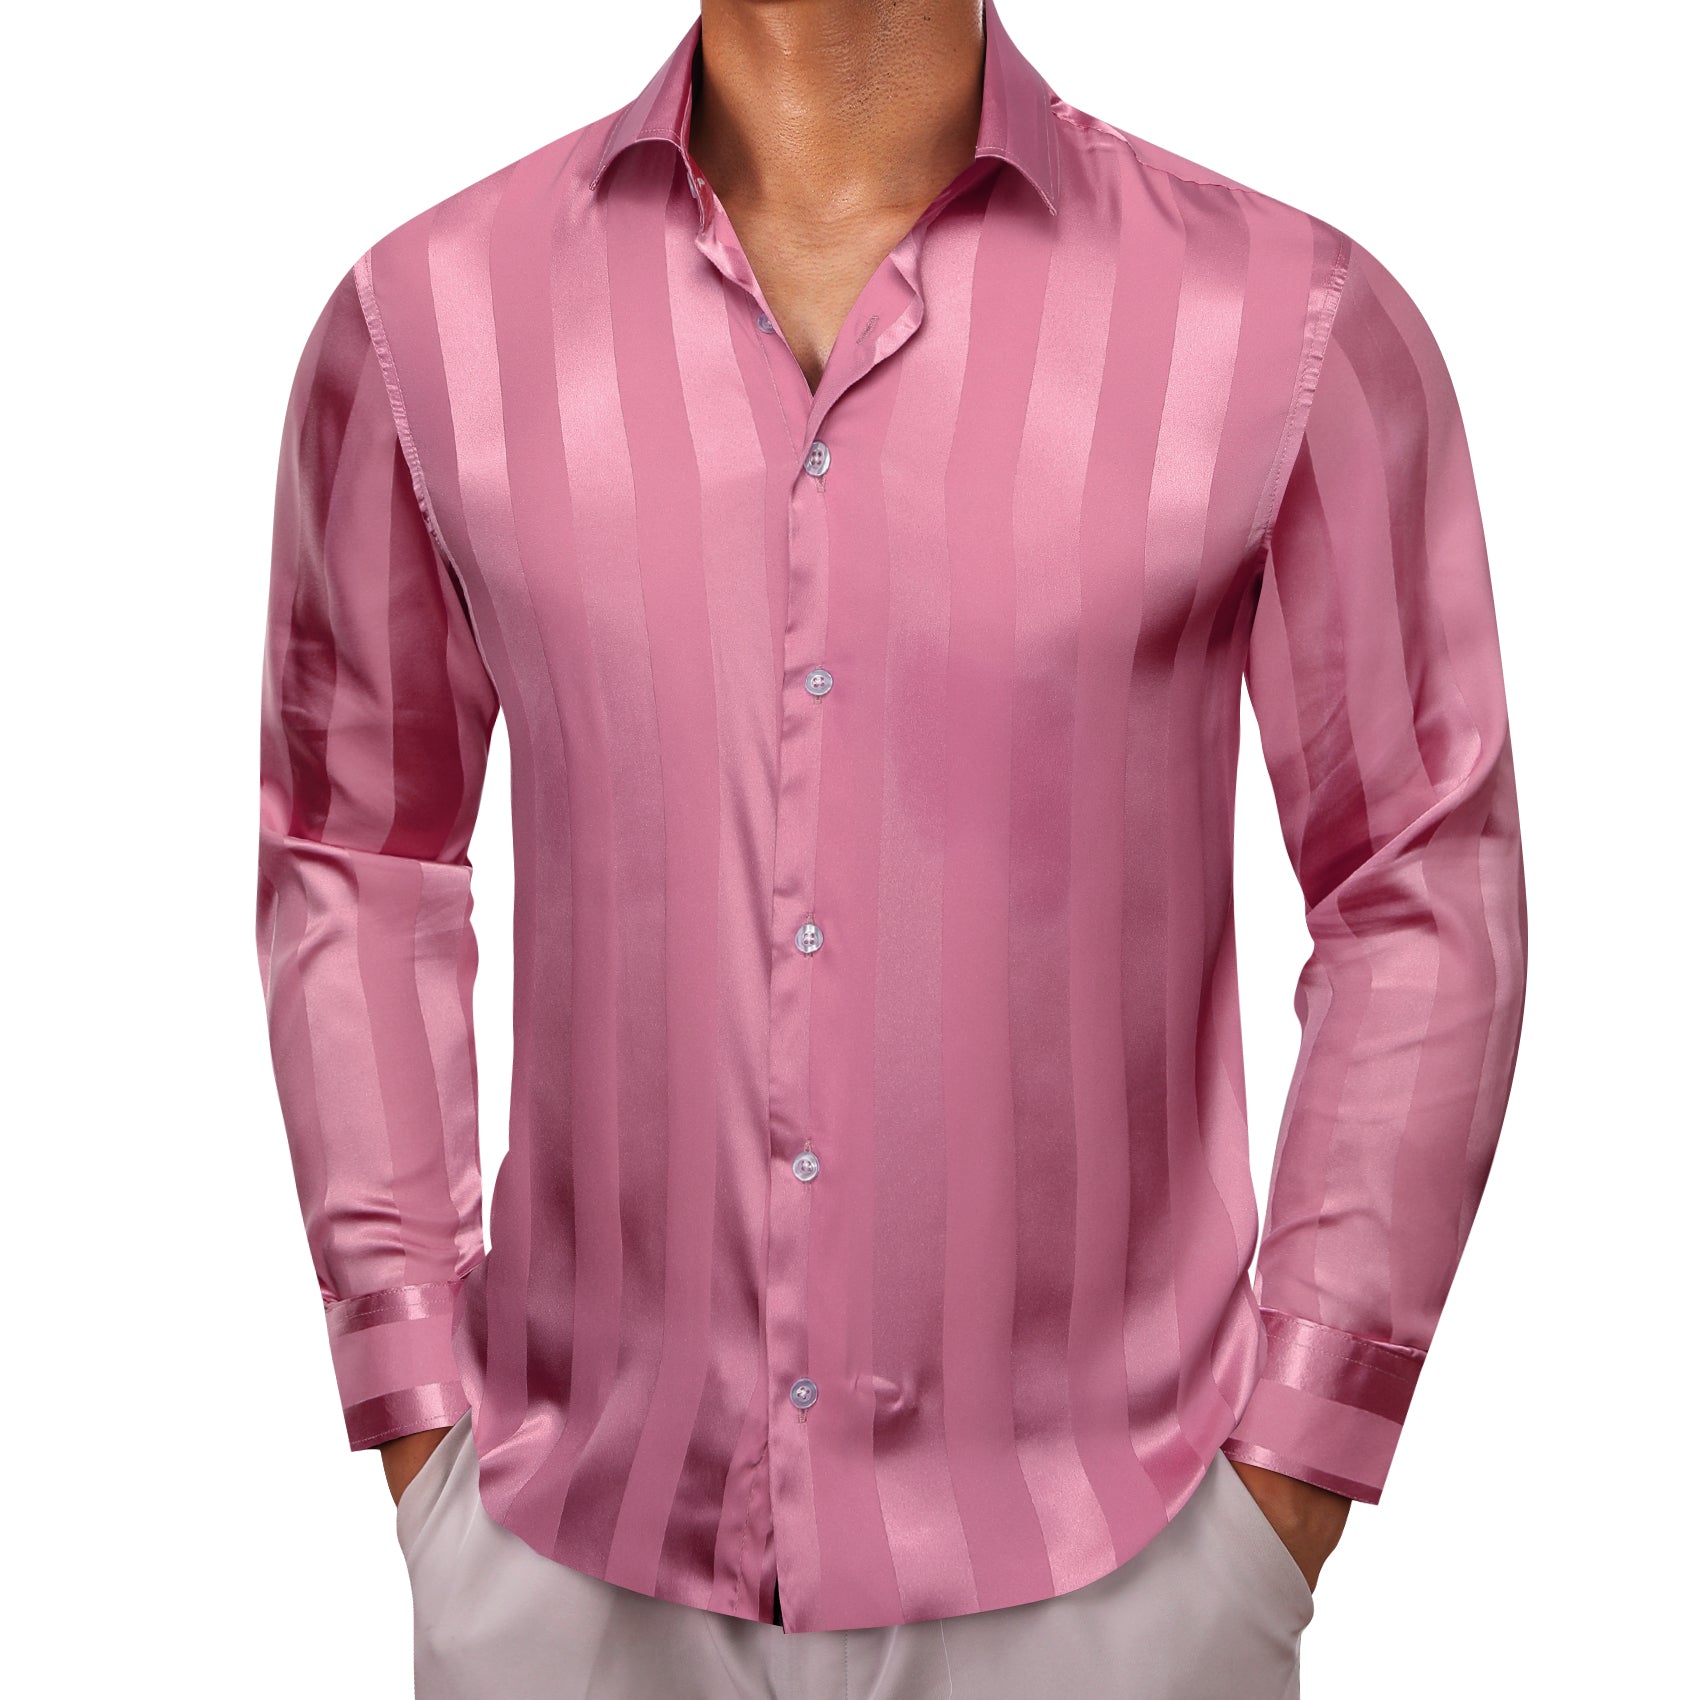 Barry.wang Lilac Striped Silk Men's Shirt